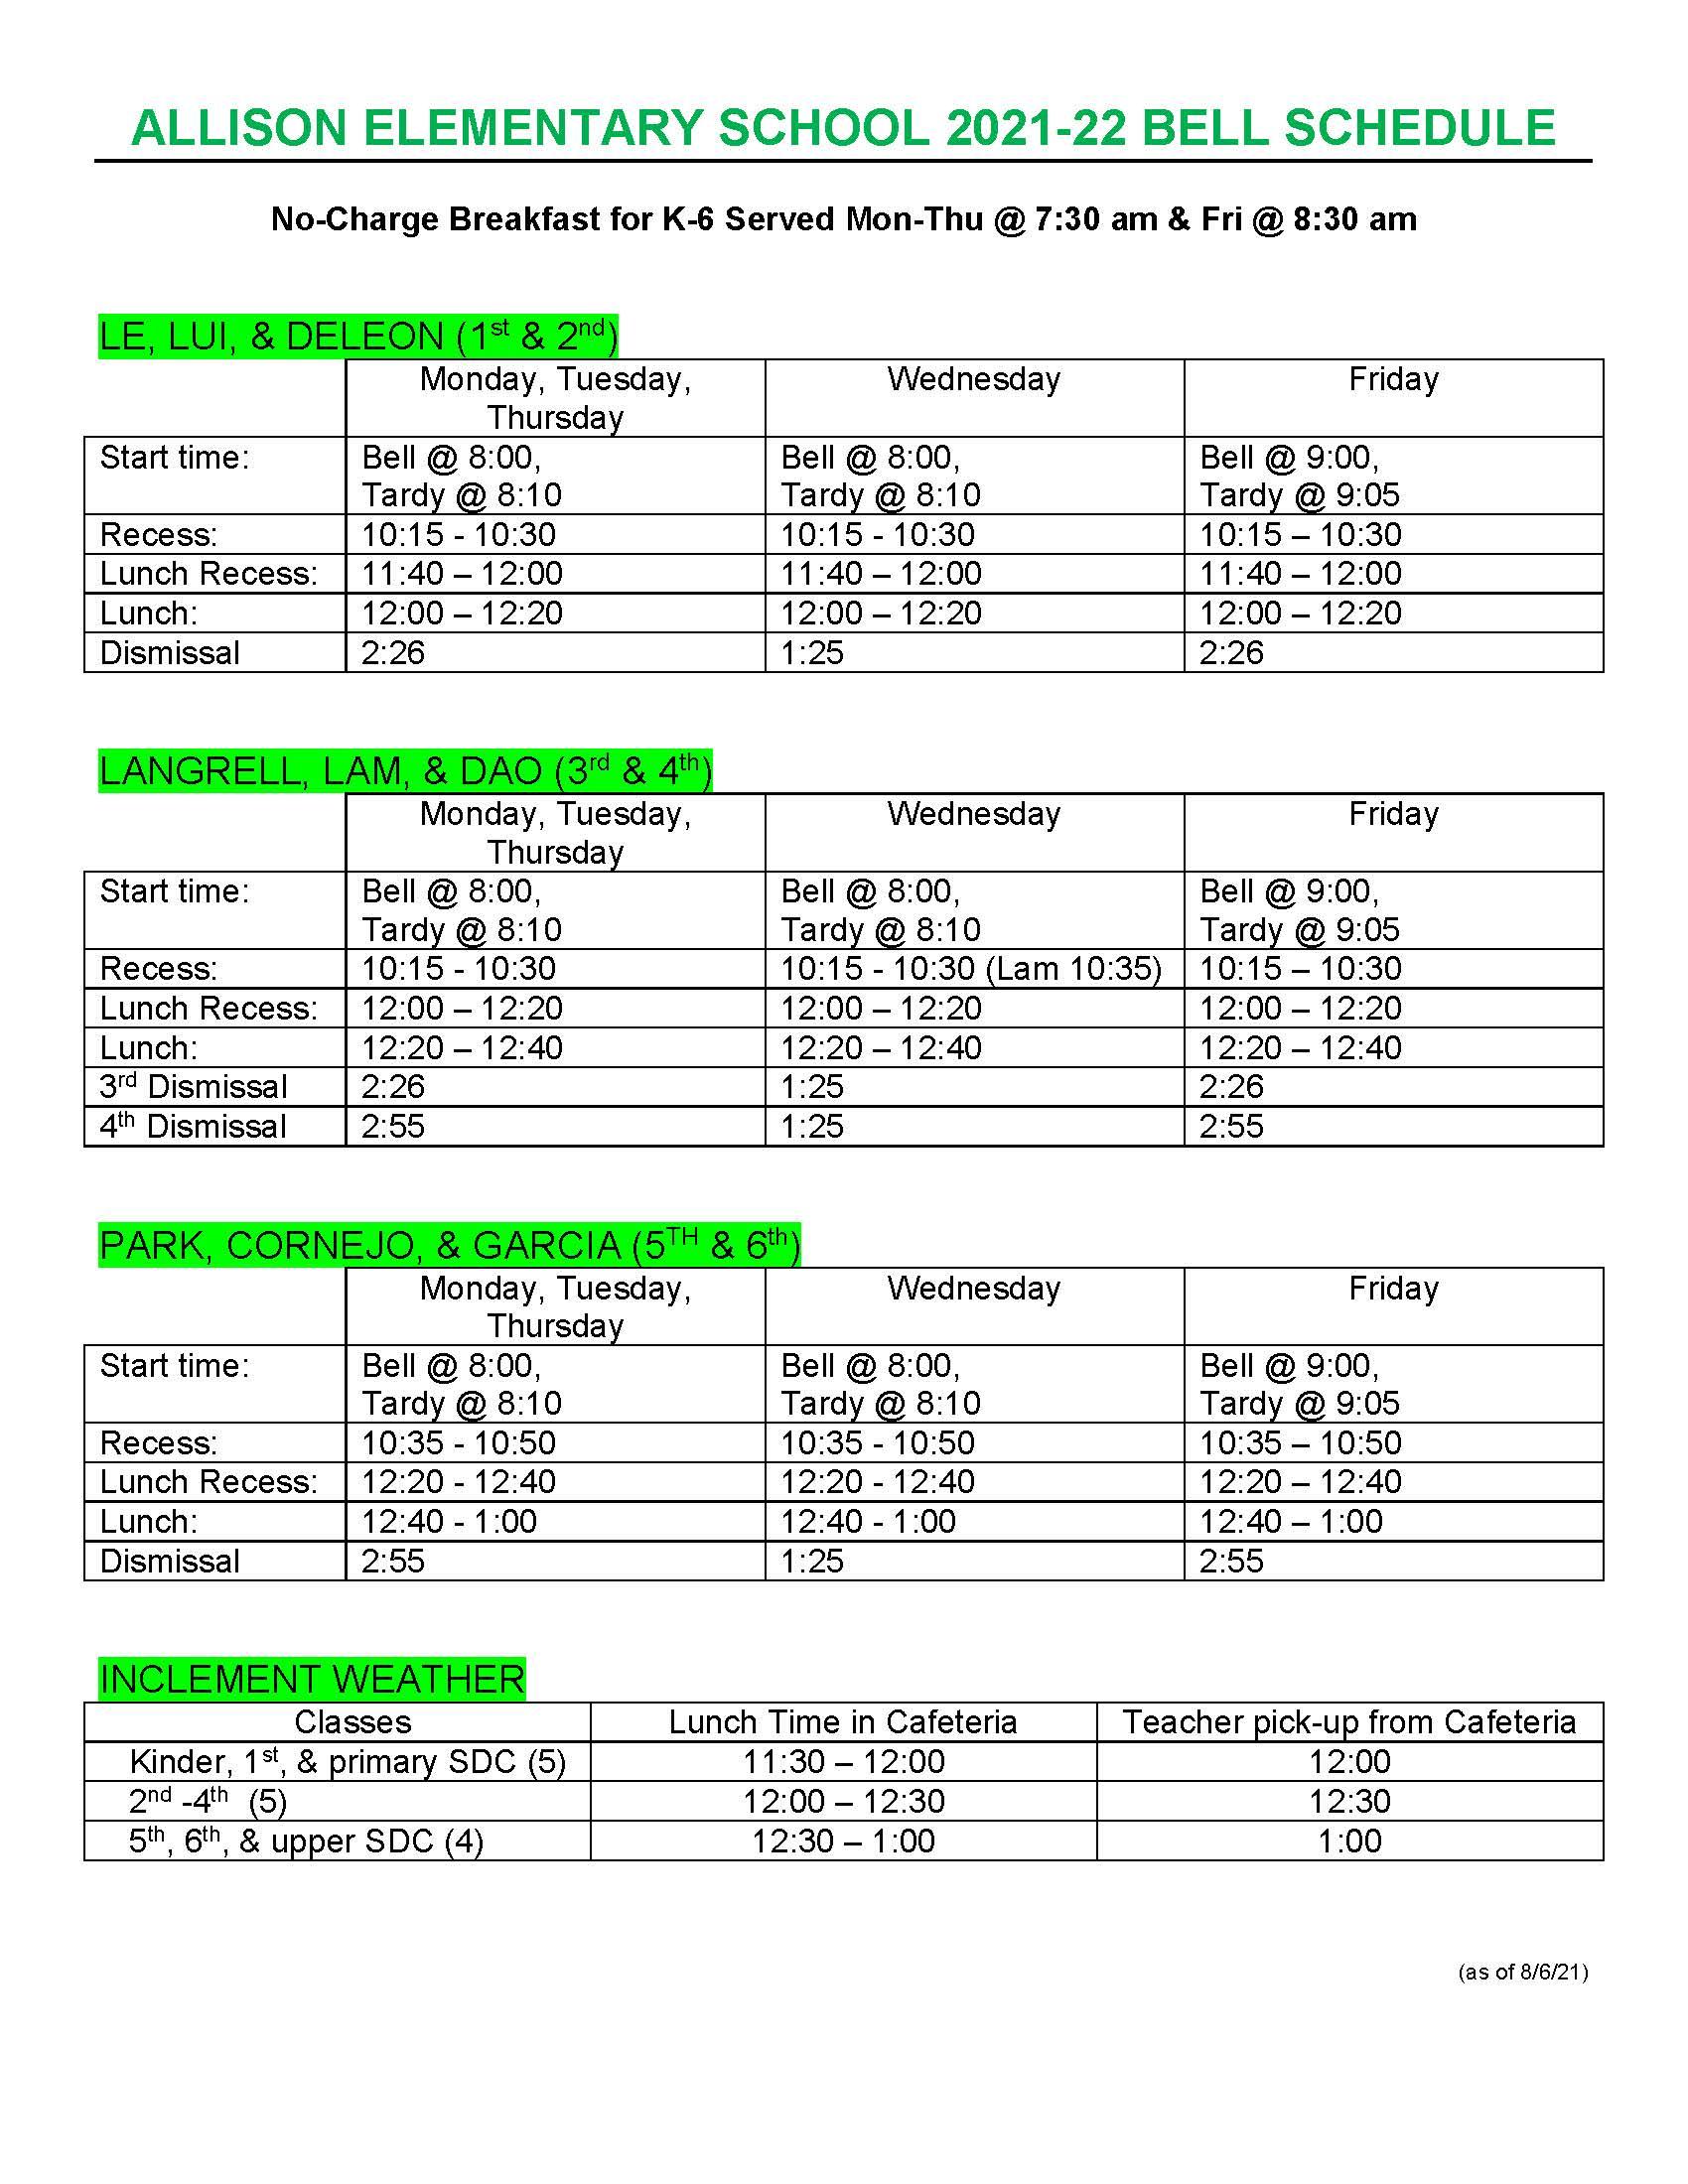 allison bell schedule page 2